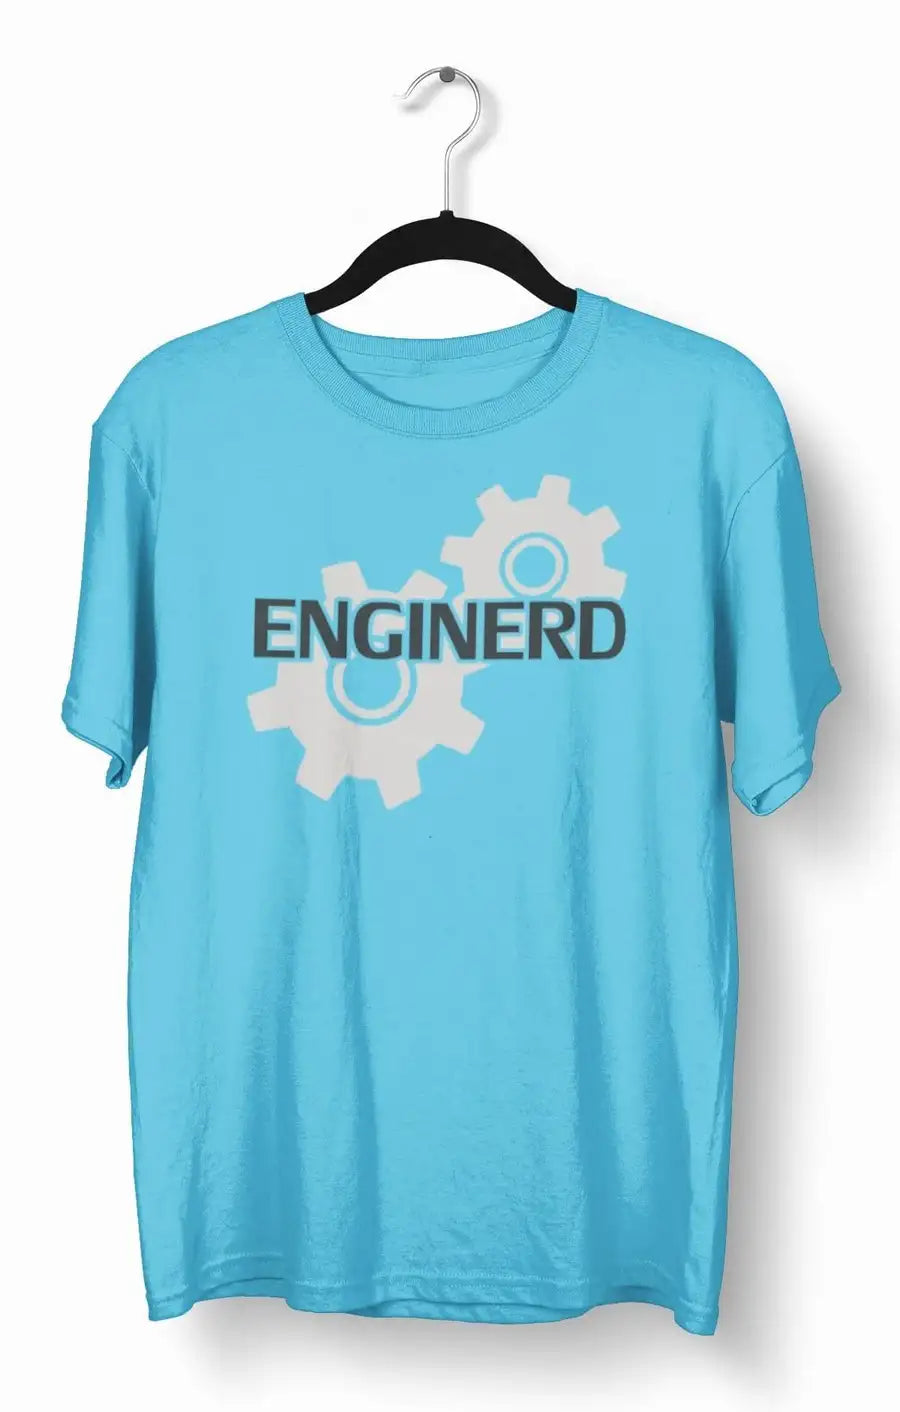 Enginerd T Shirt for Men | Premium Design | Catch My Drift India - Catch My Drift India Clothing clothing, engineer, engineering, made in india, multi colour, shirt, t shirt, tshirt, white